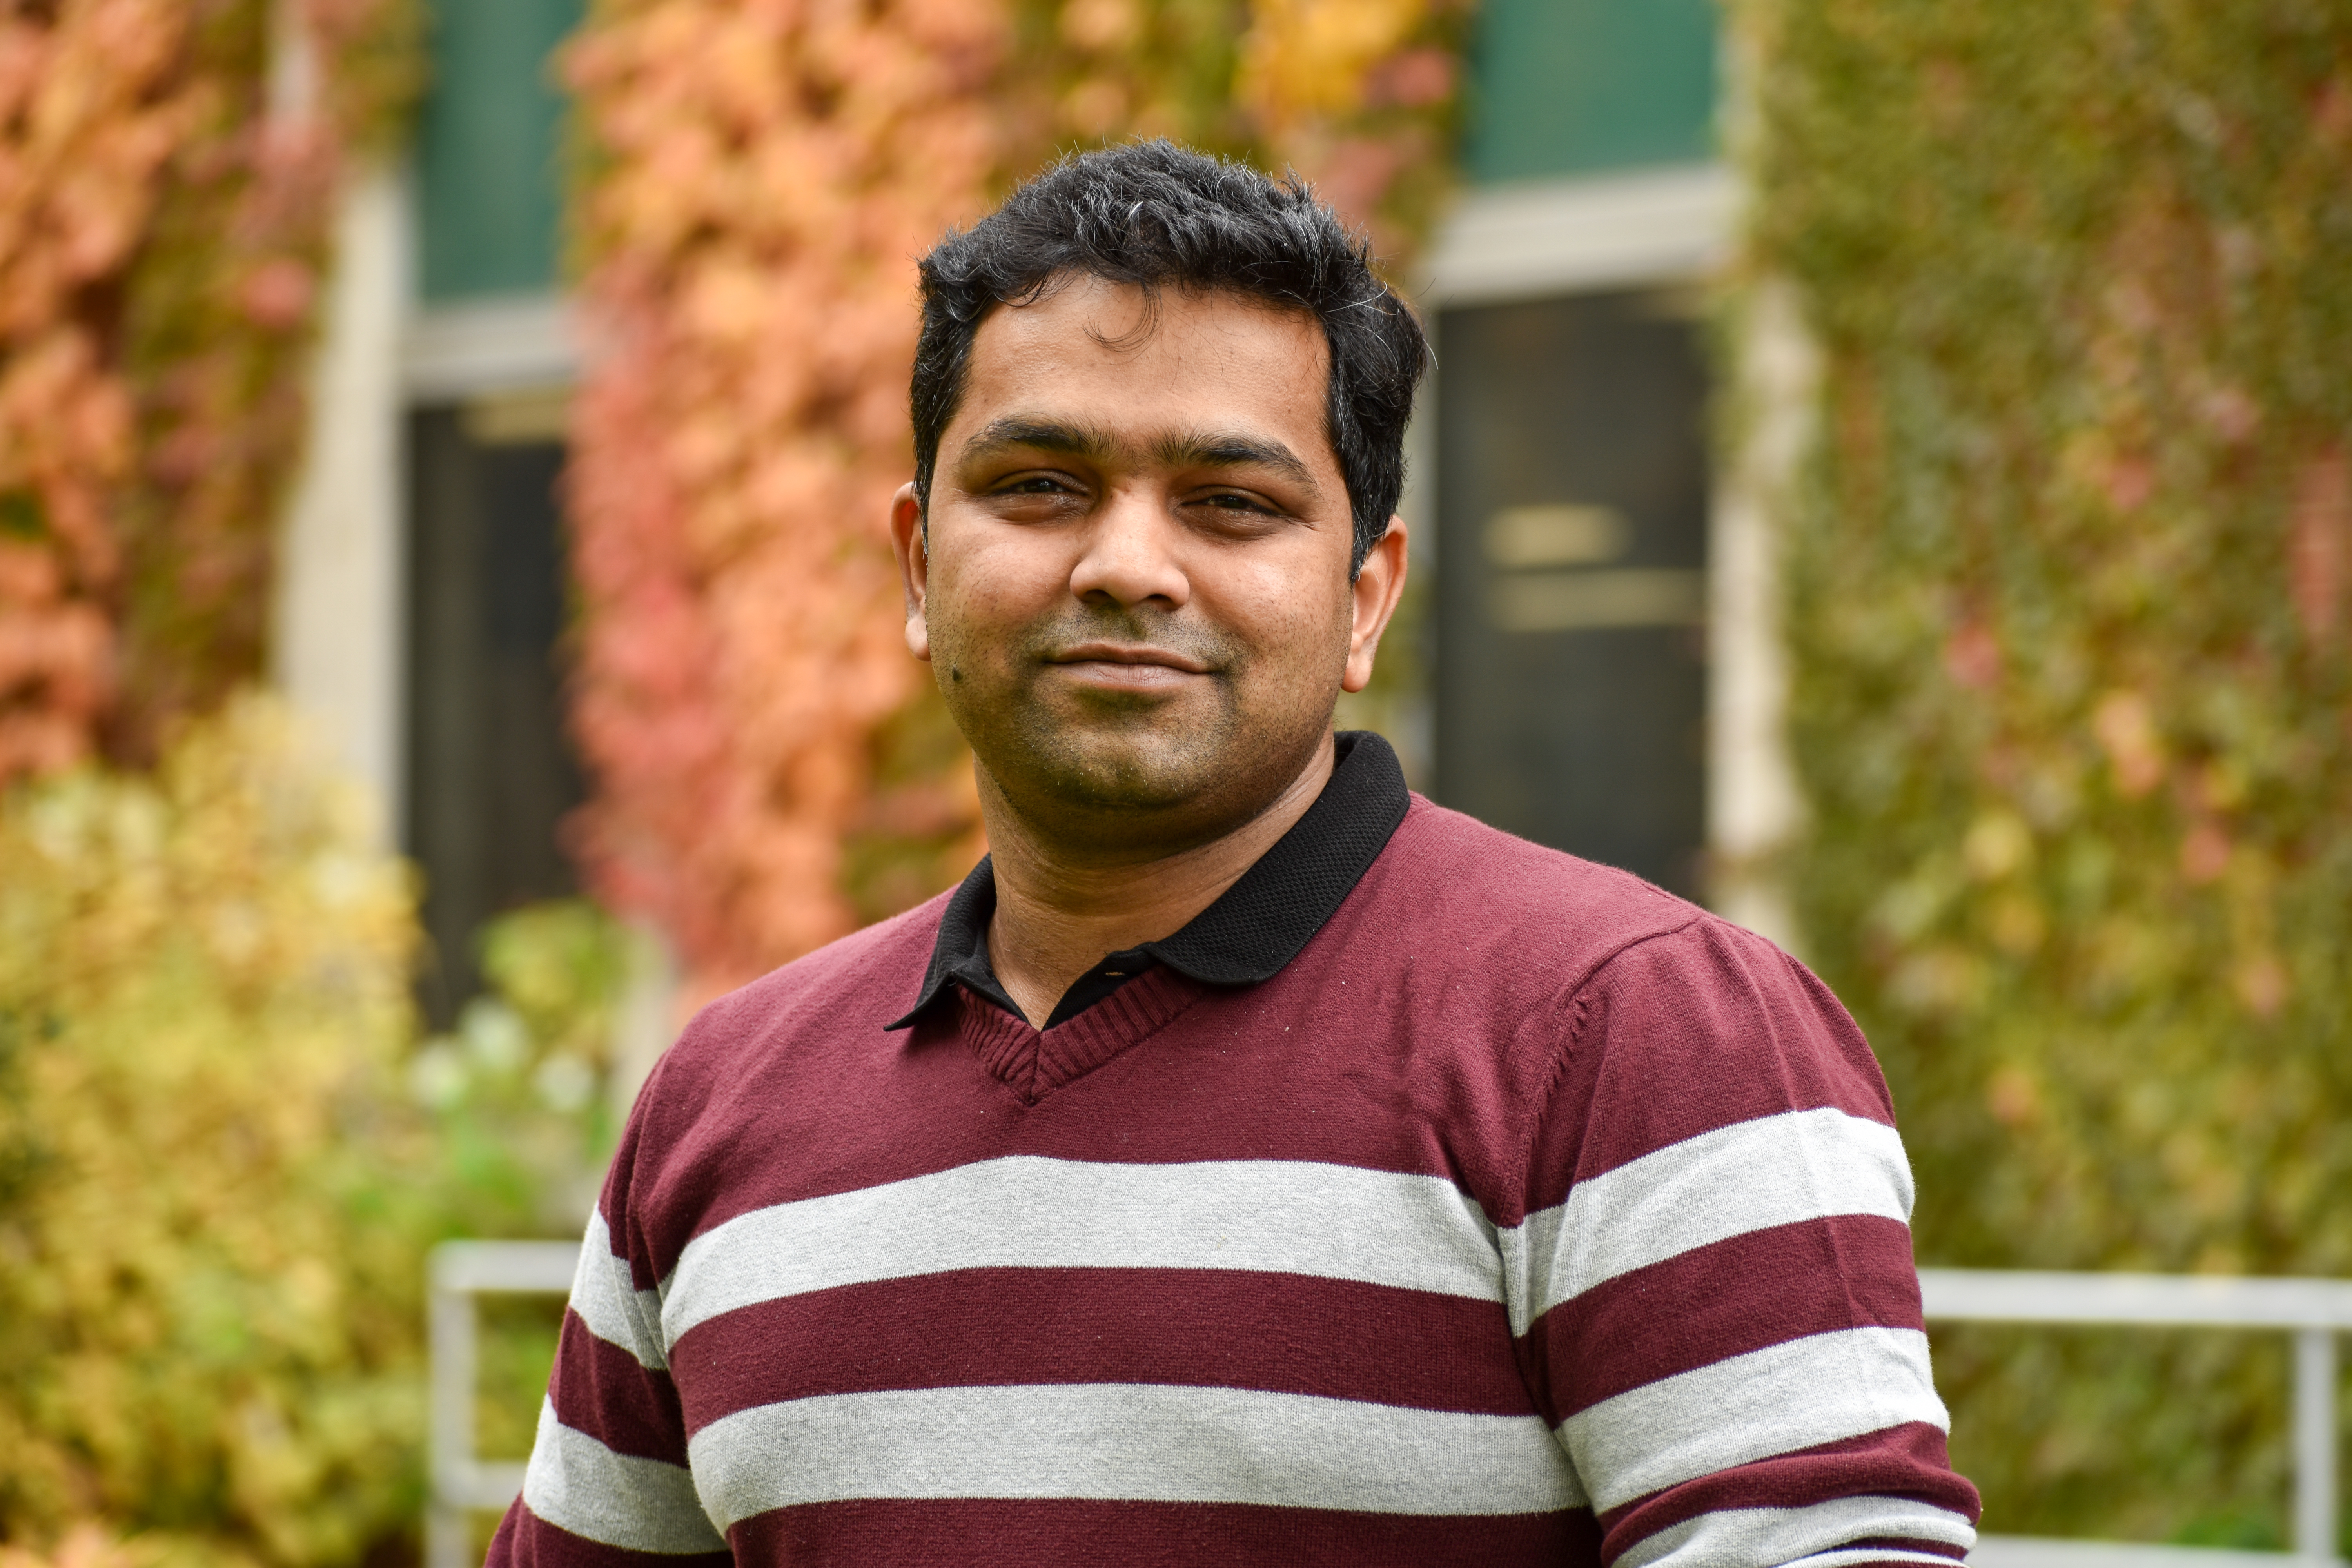 Michigan State University postdoctoral researcher Deepak Bhandar